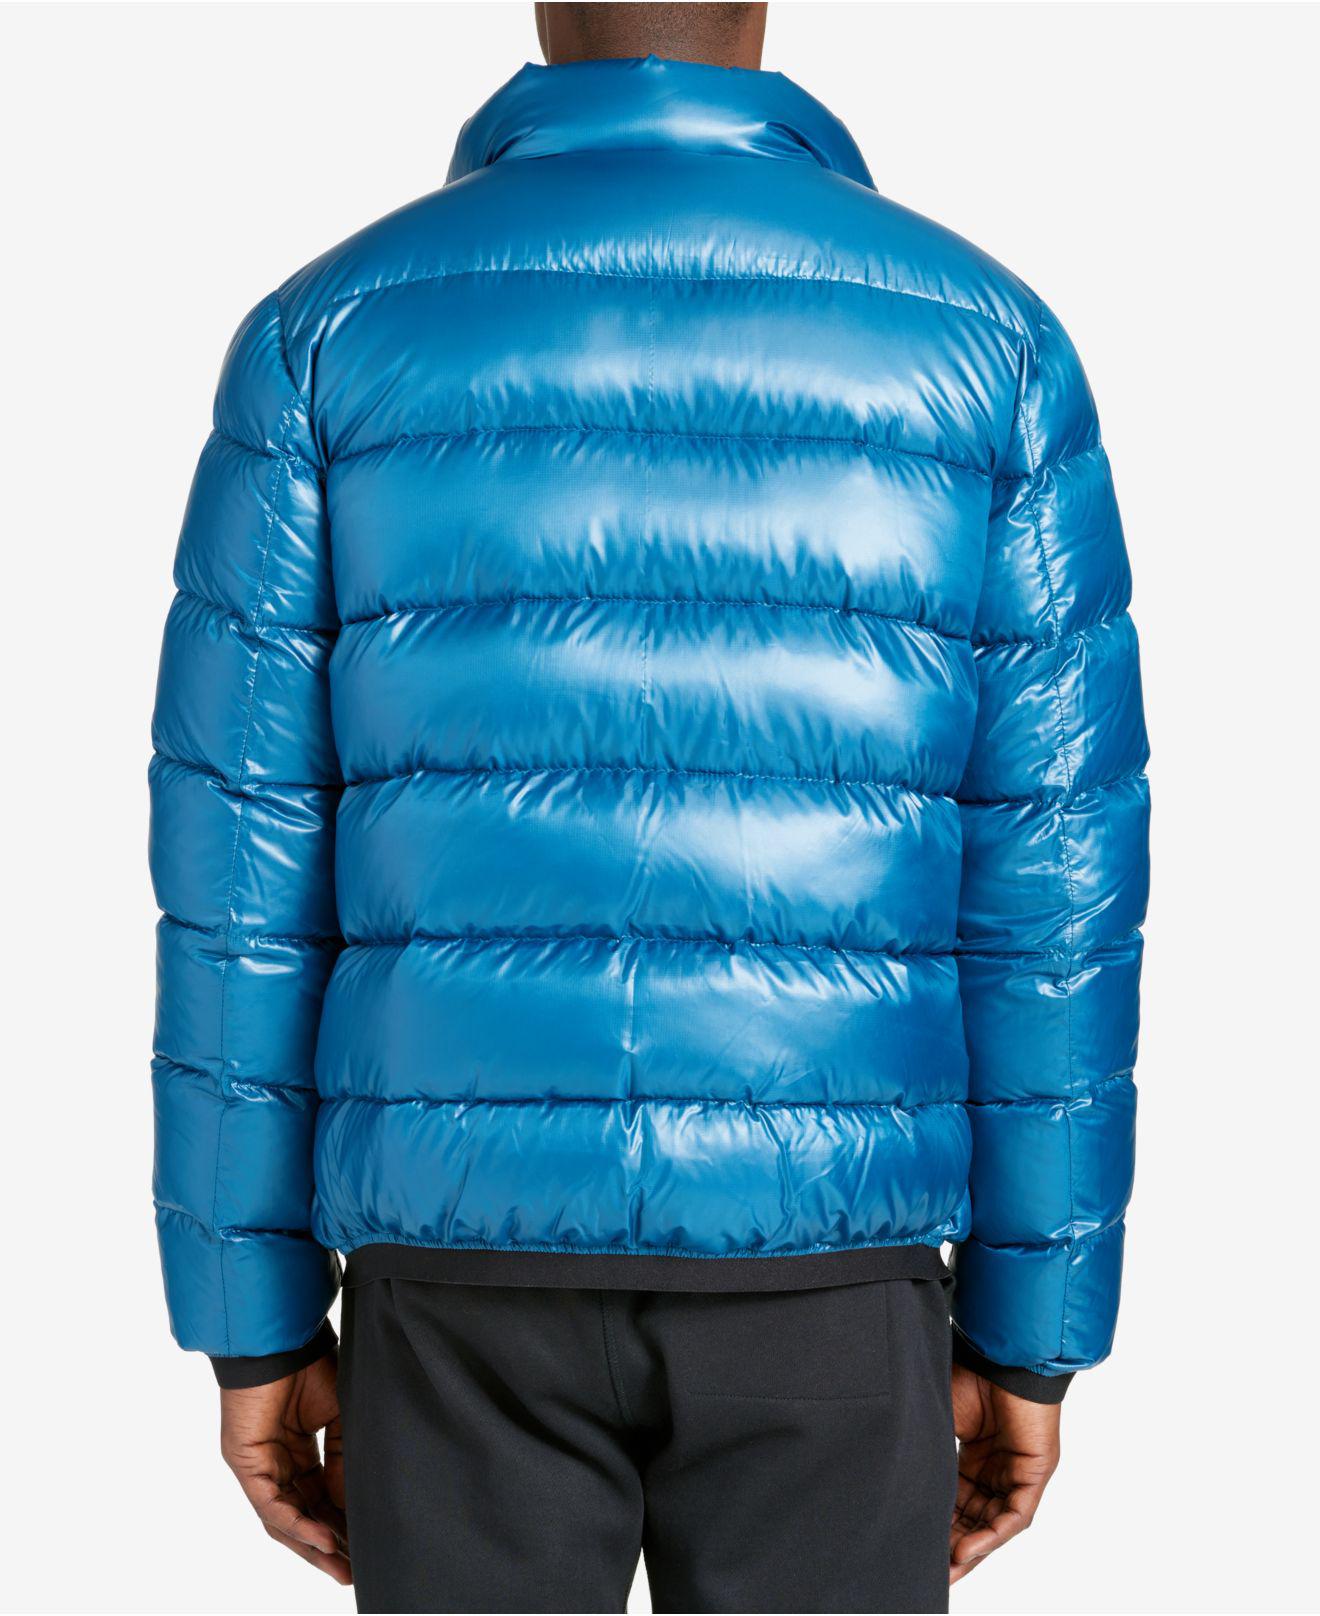 DKNY Men's Essential Puffer Jacket in Teal (Blue) for Men - Lyst